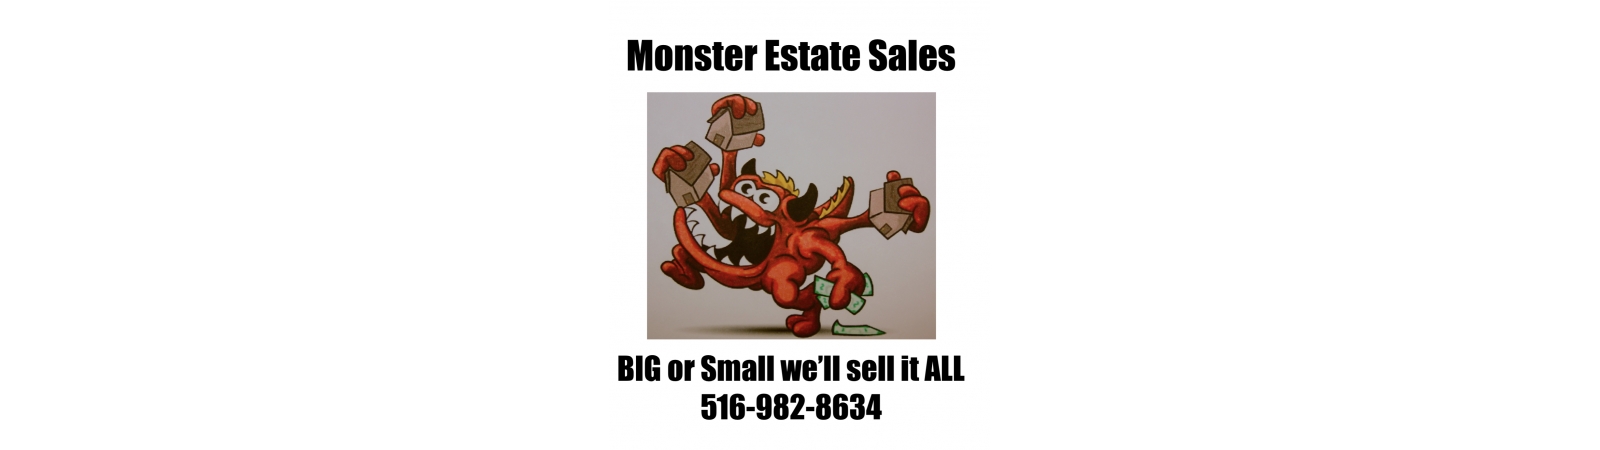 Monster Estate Sales Inc. | Auction Ninja